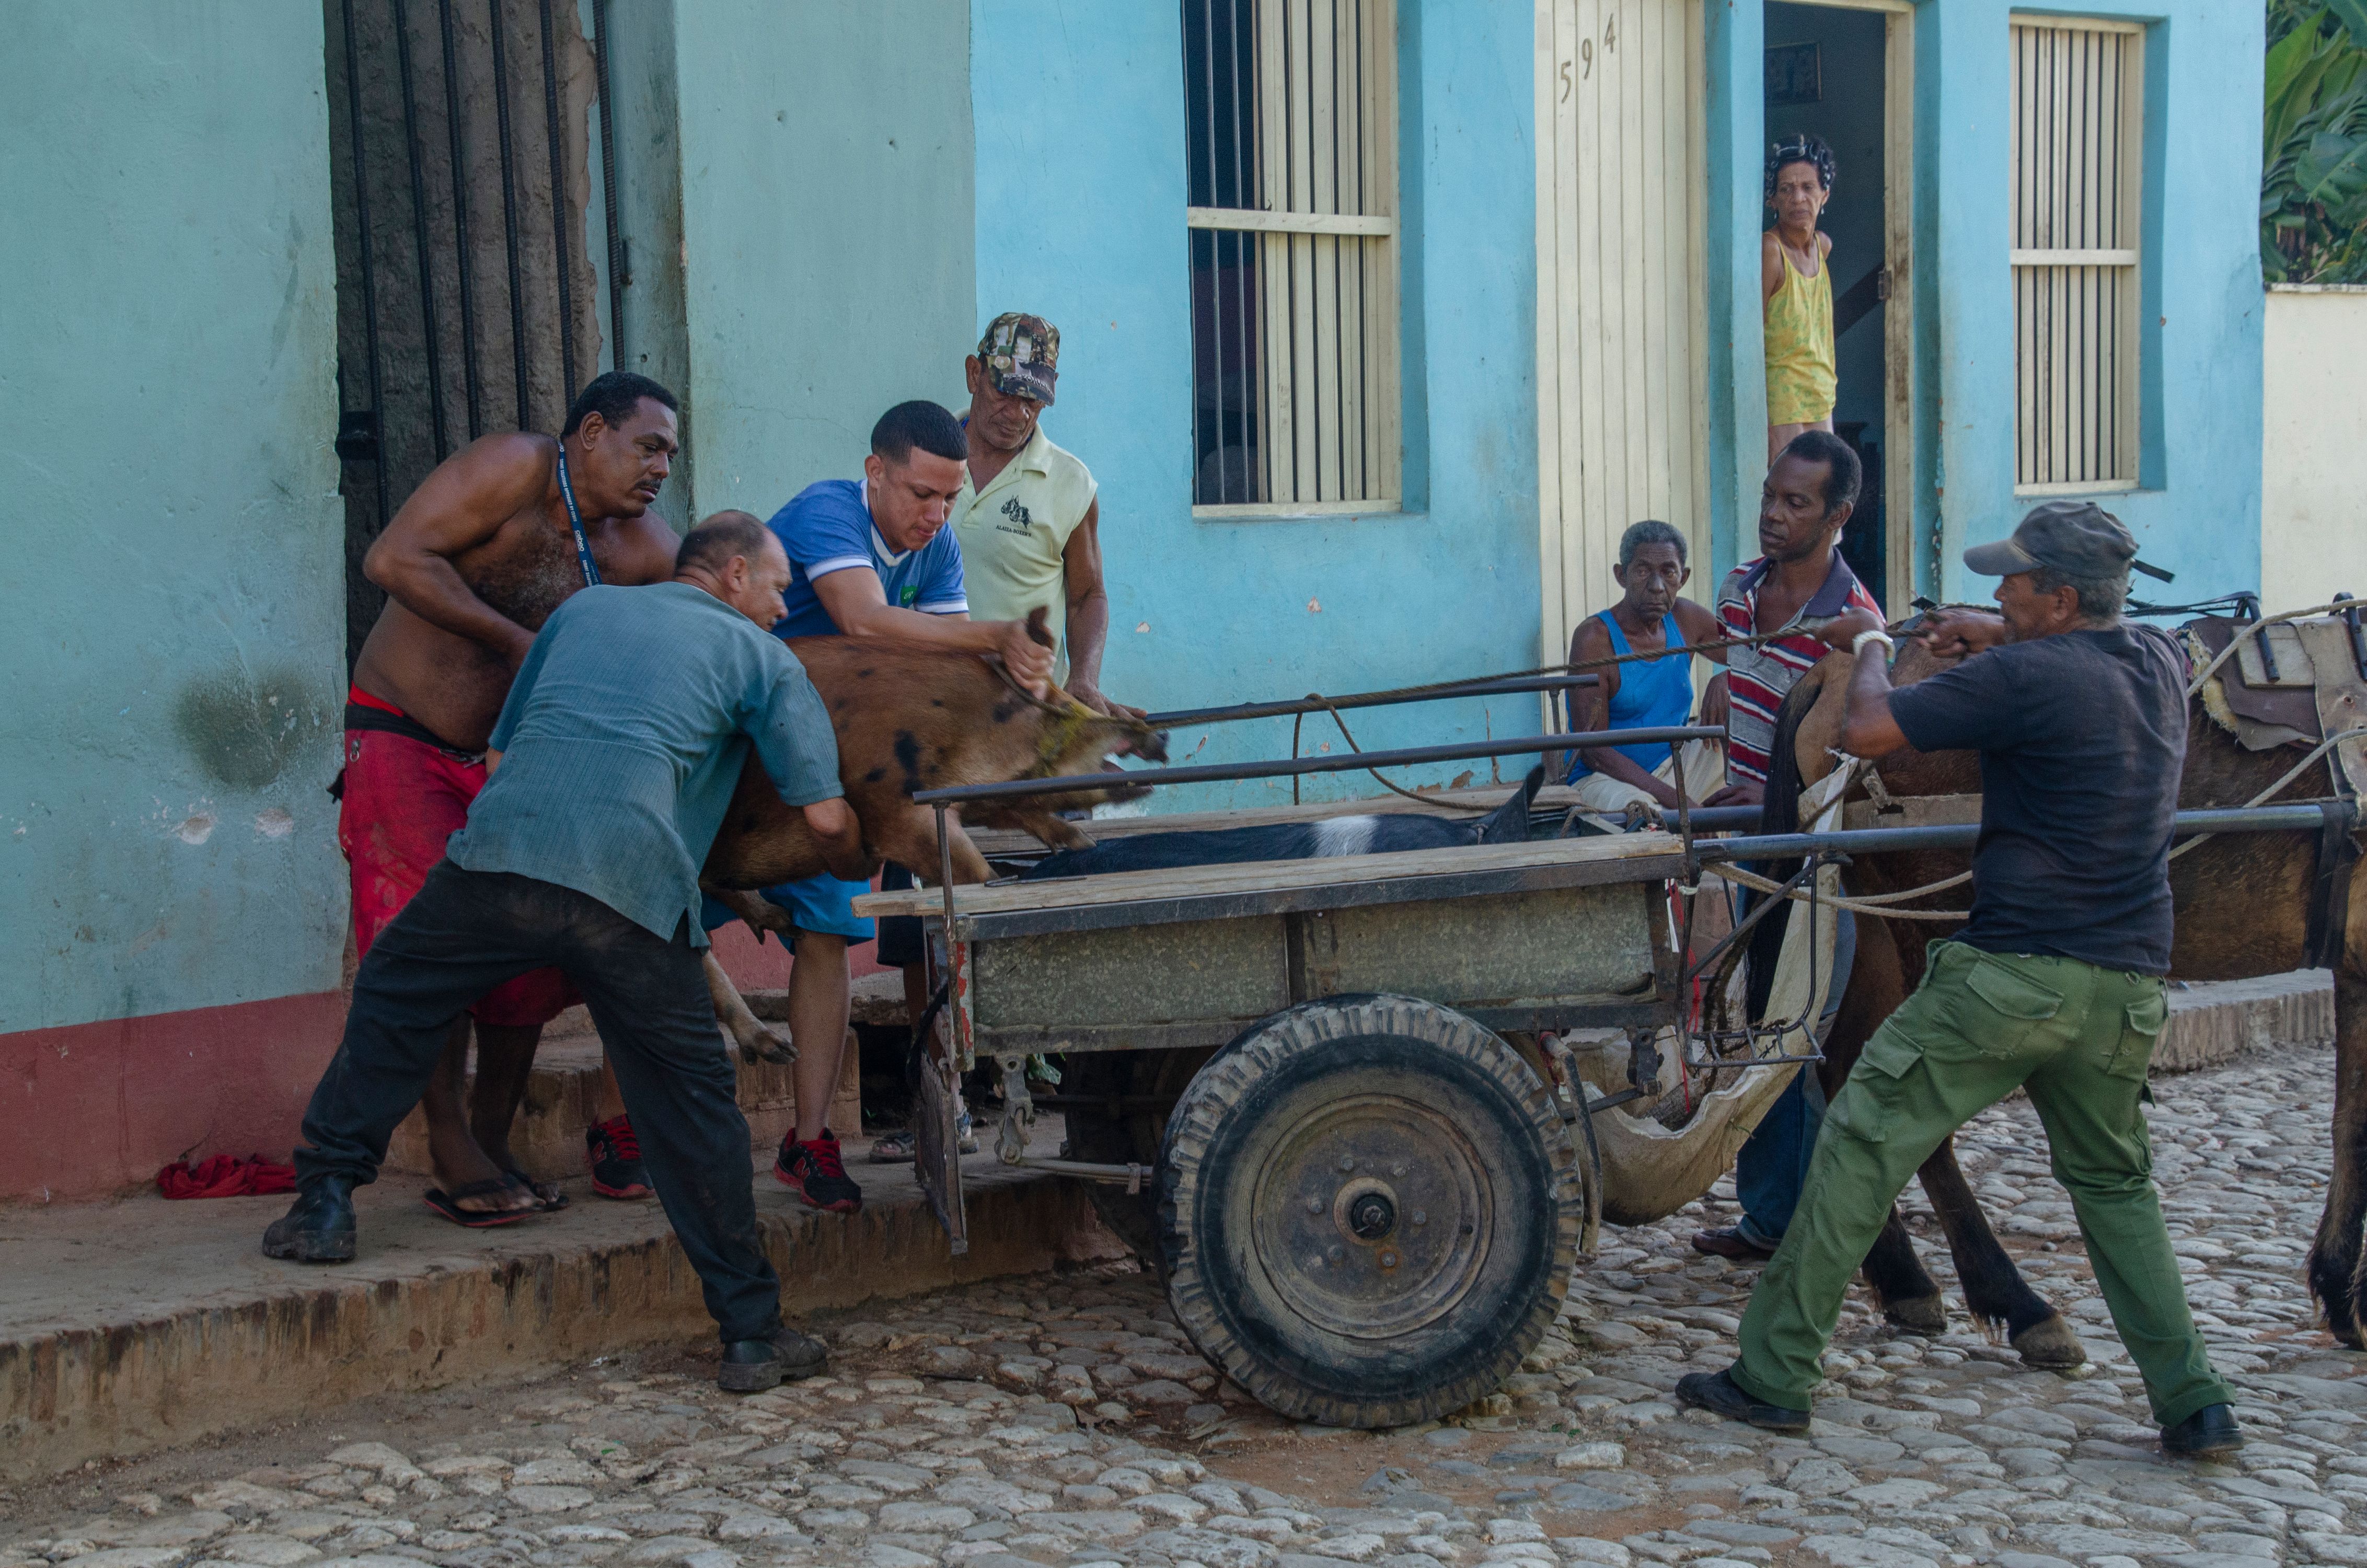 Pigs going to market, Trinidad, Cuba